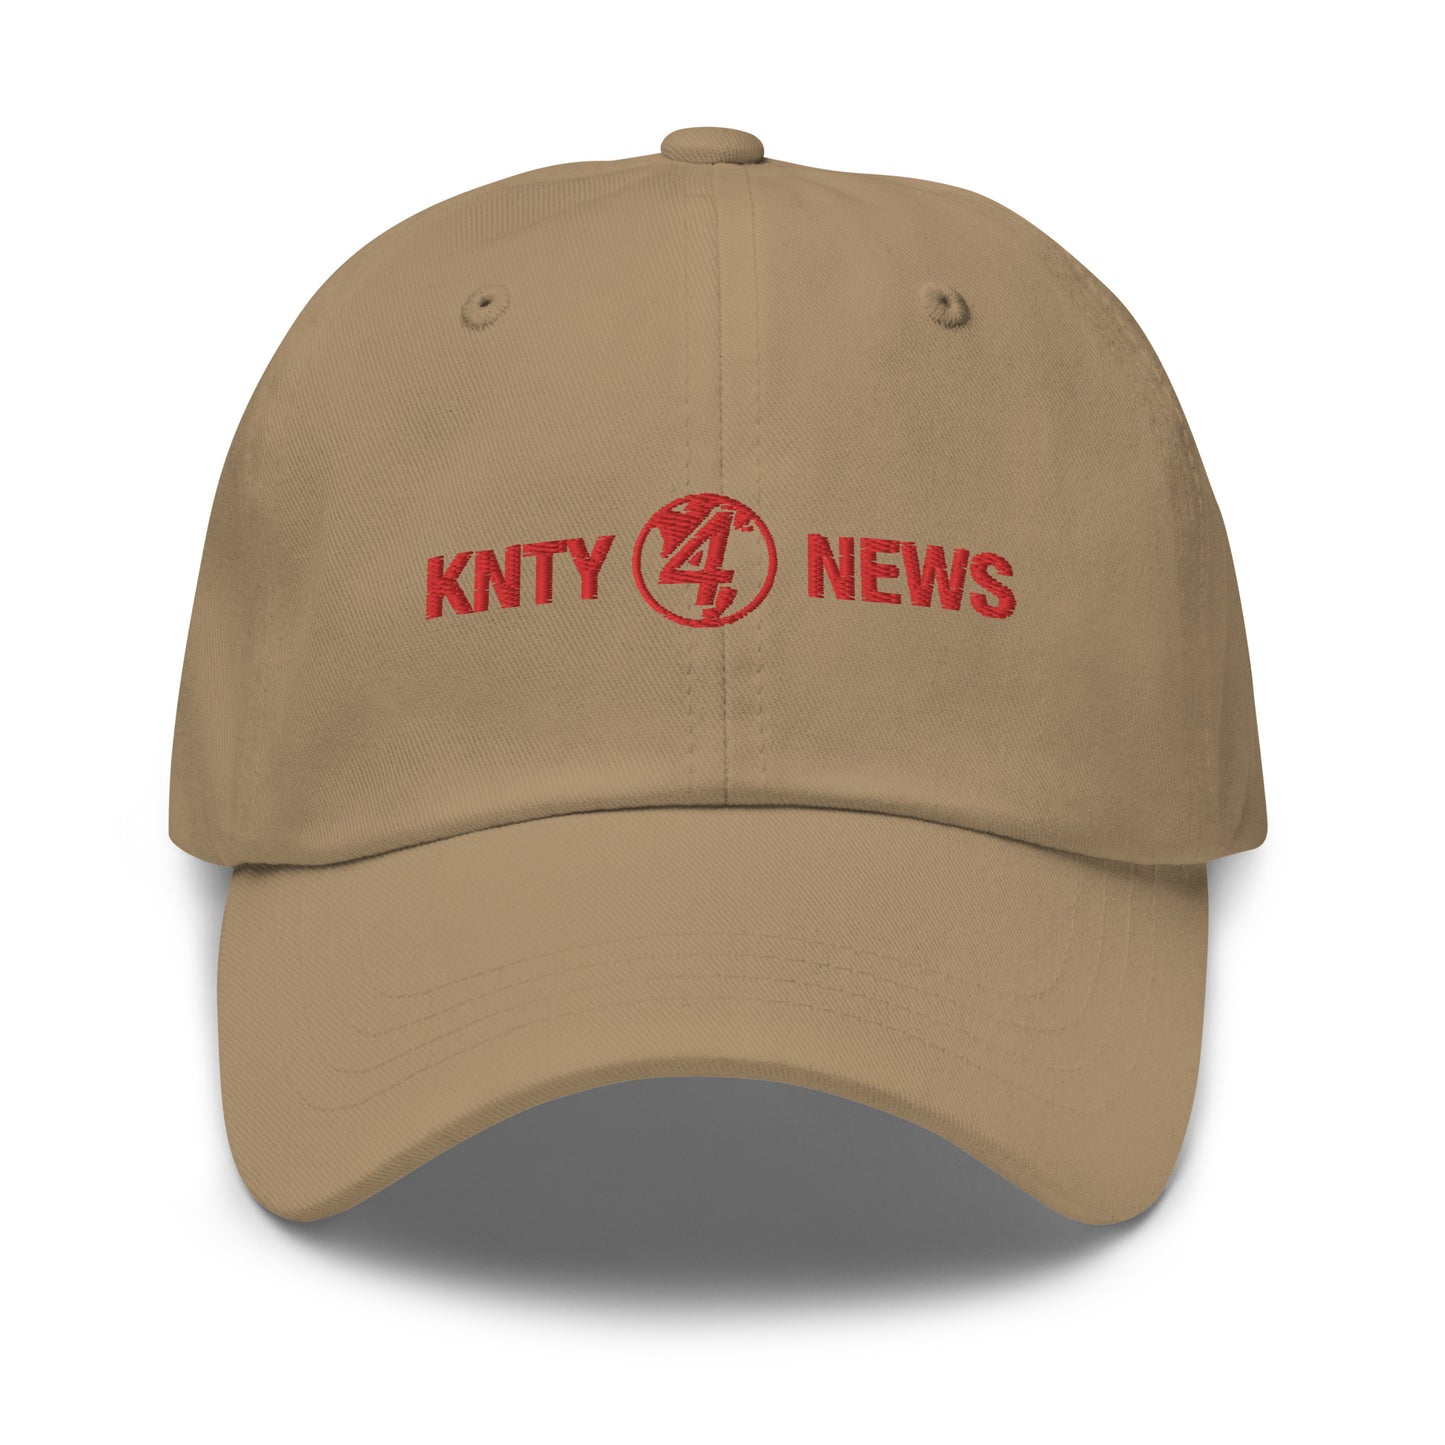 KNTY News Dad hat